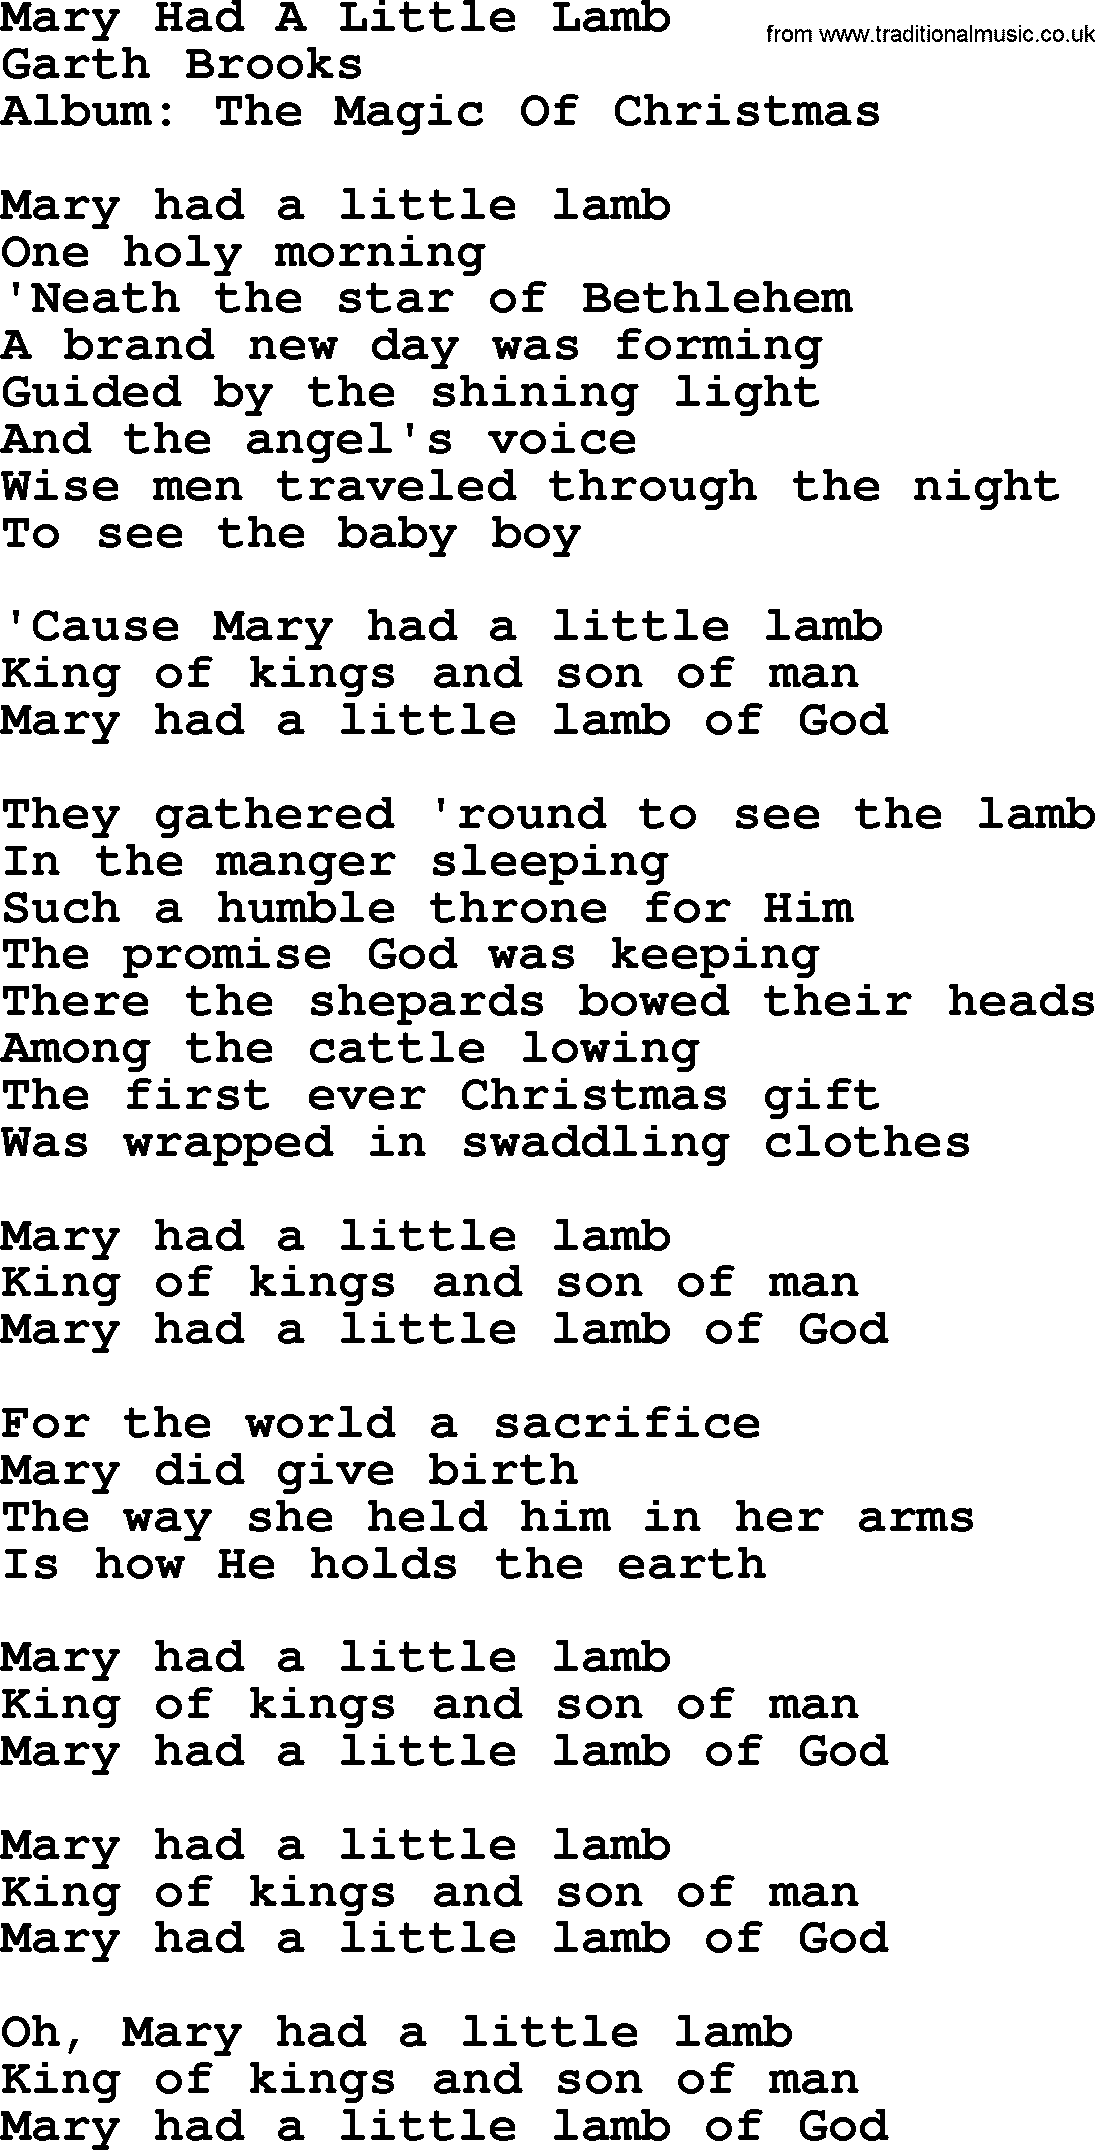 Garth Brooks song: Mary Had A Little Lamb, lyrics